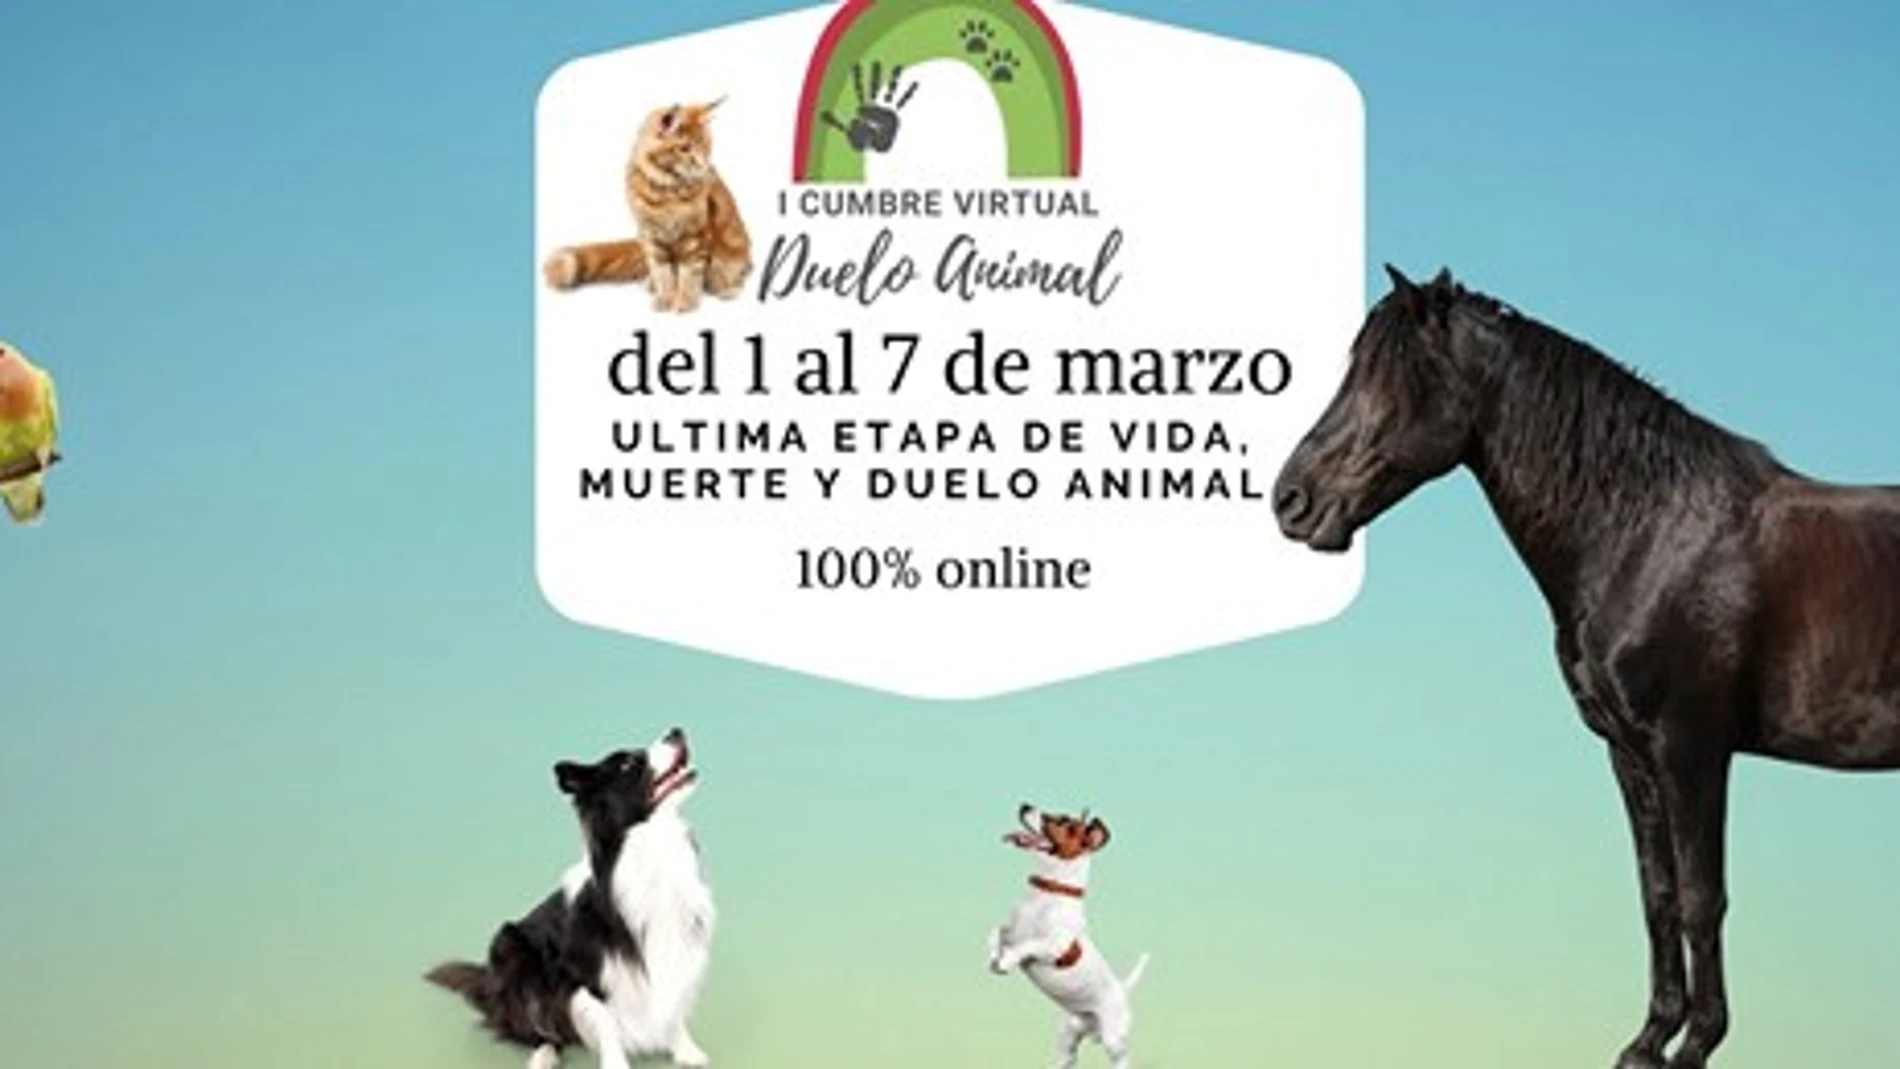 La I Cumbre Virtual del Duelo Animal se celebra del 1 al 7 de marzo